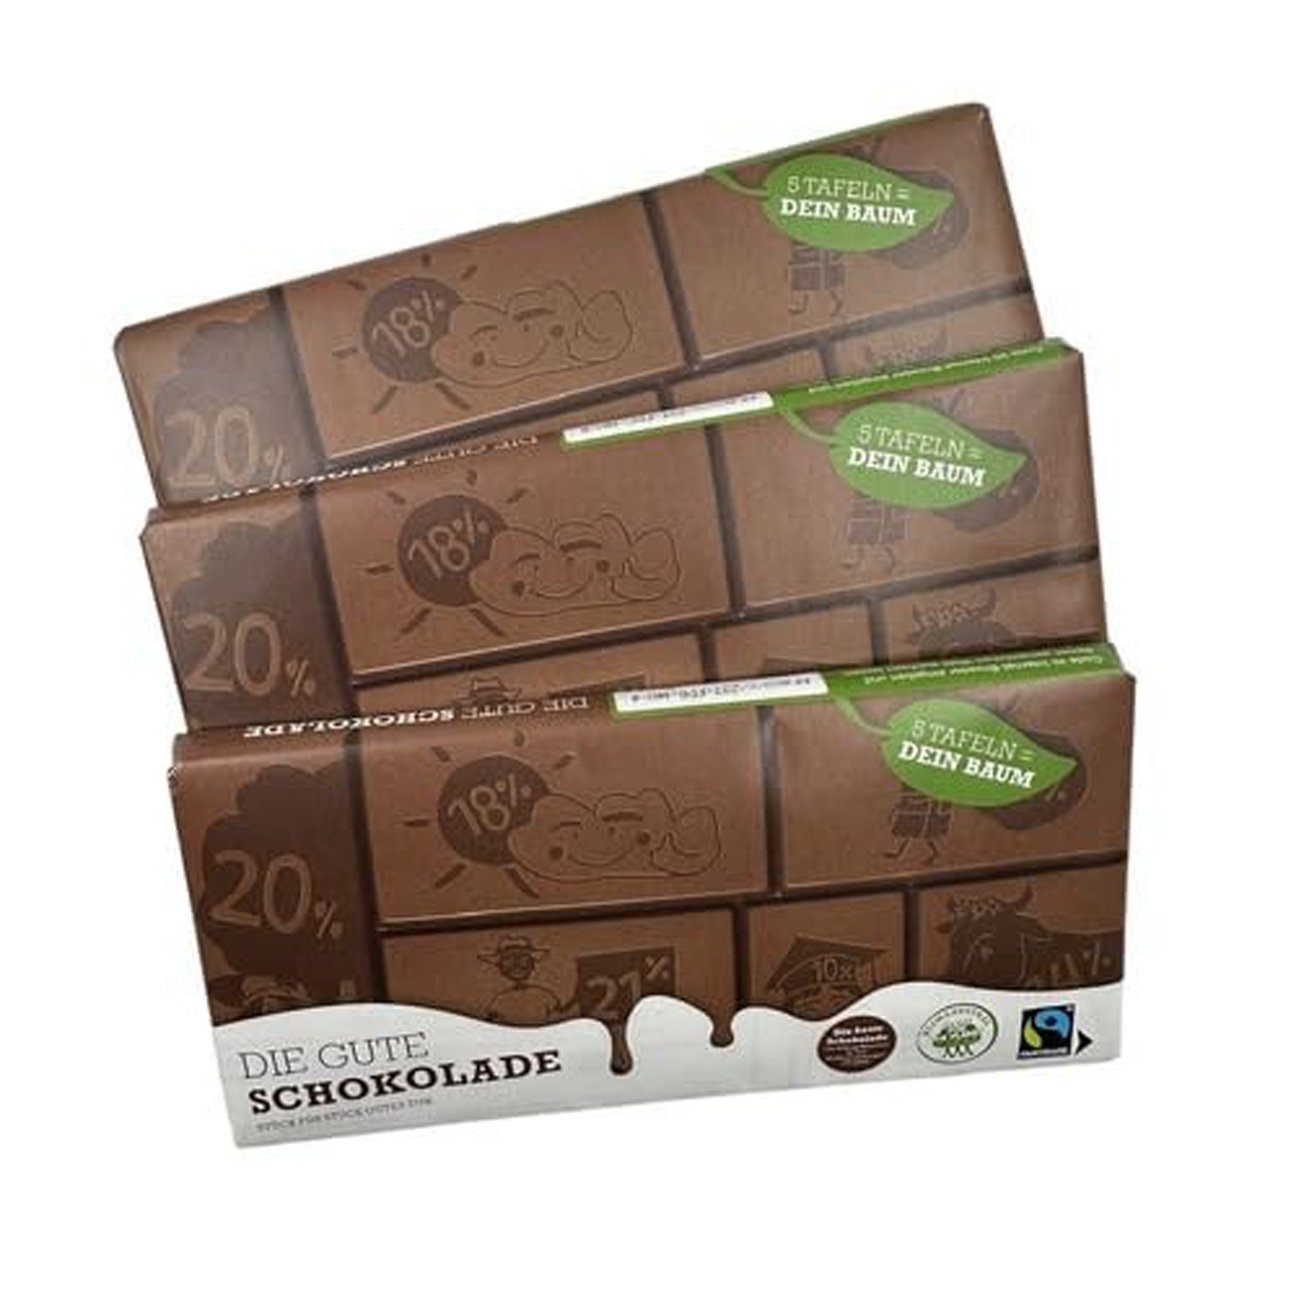 Die Gute Schokolade - 3 Tafeln Geschenkset